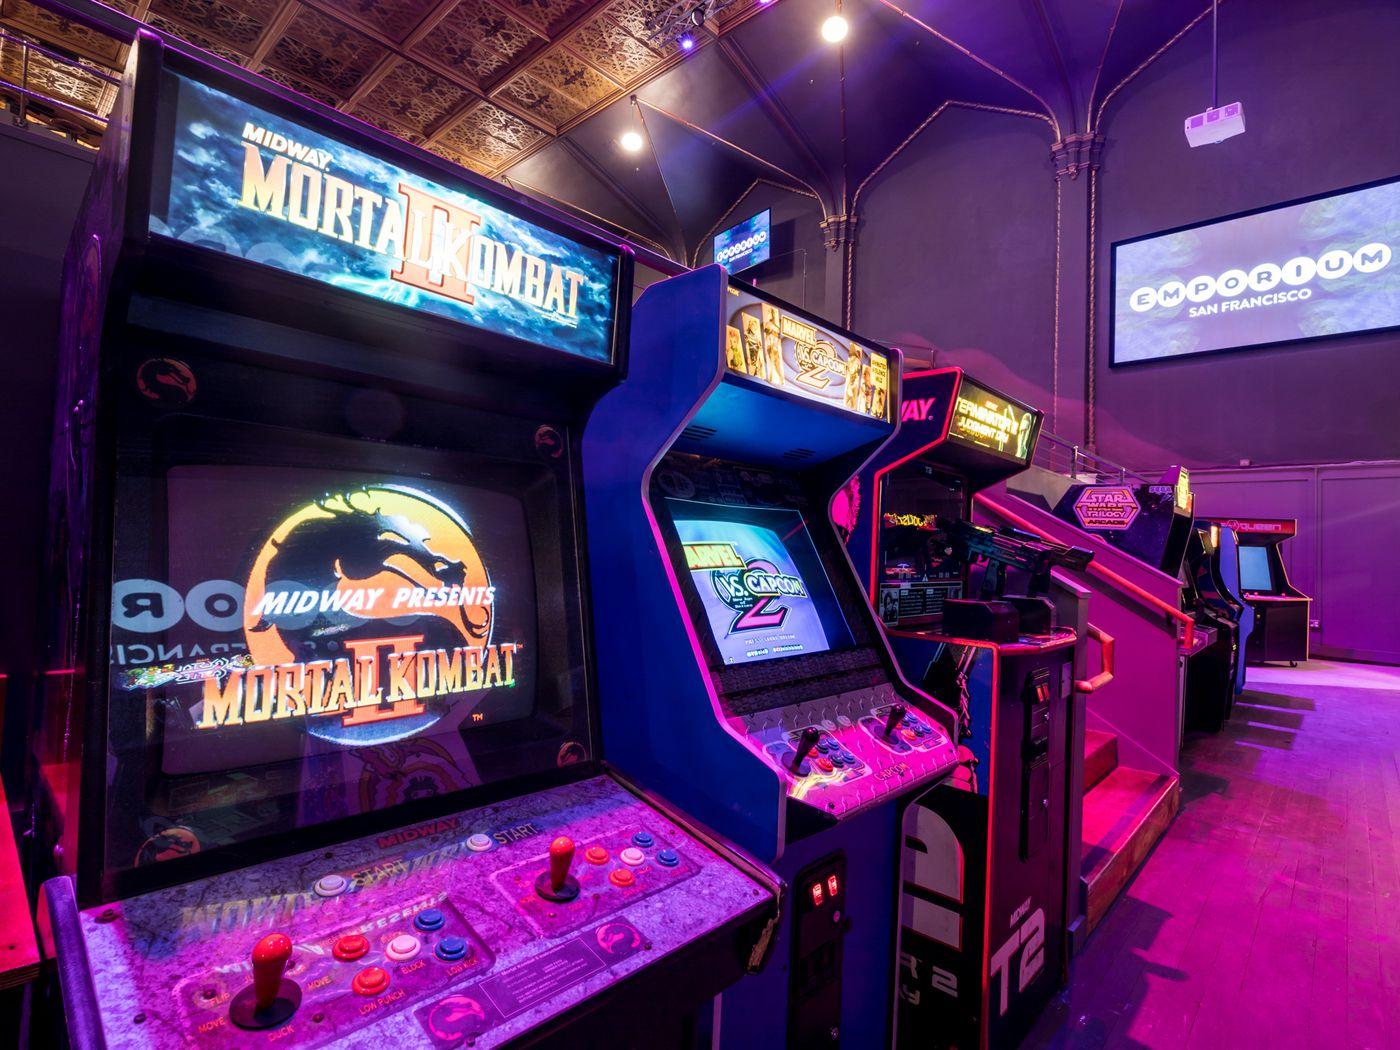 San Francisco Bars With Great Arcade Games